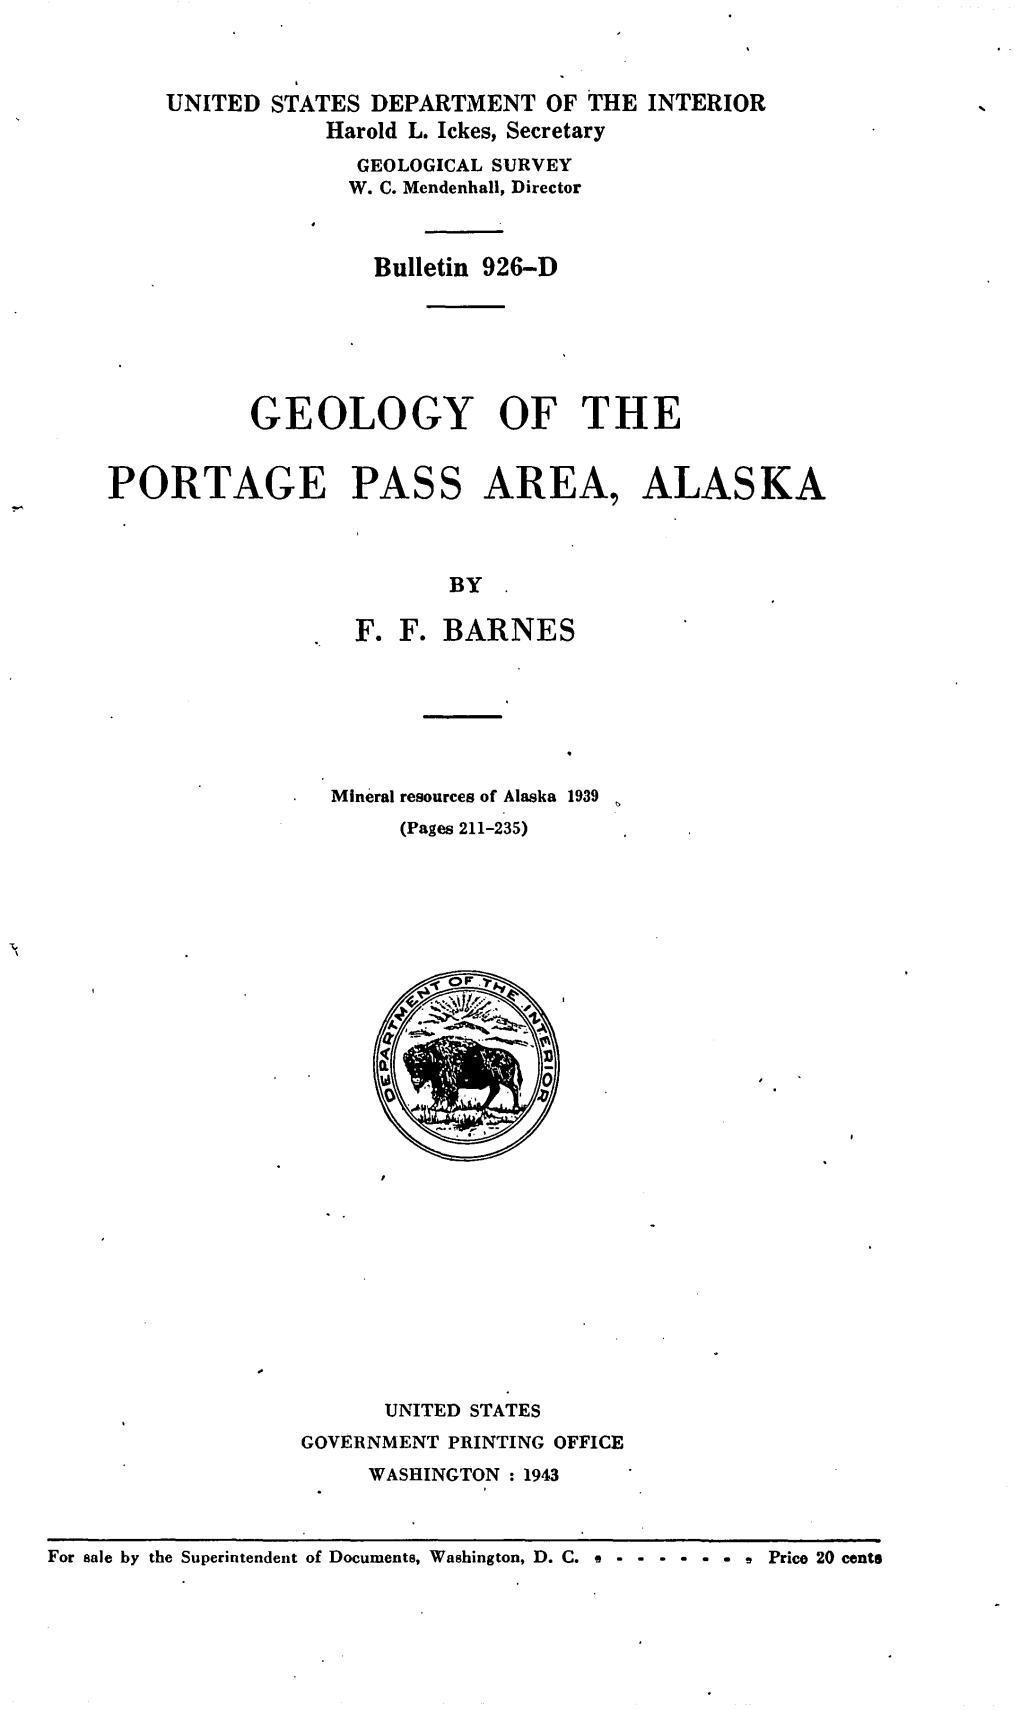 Geology of the Portage Pass Area, Alaska